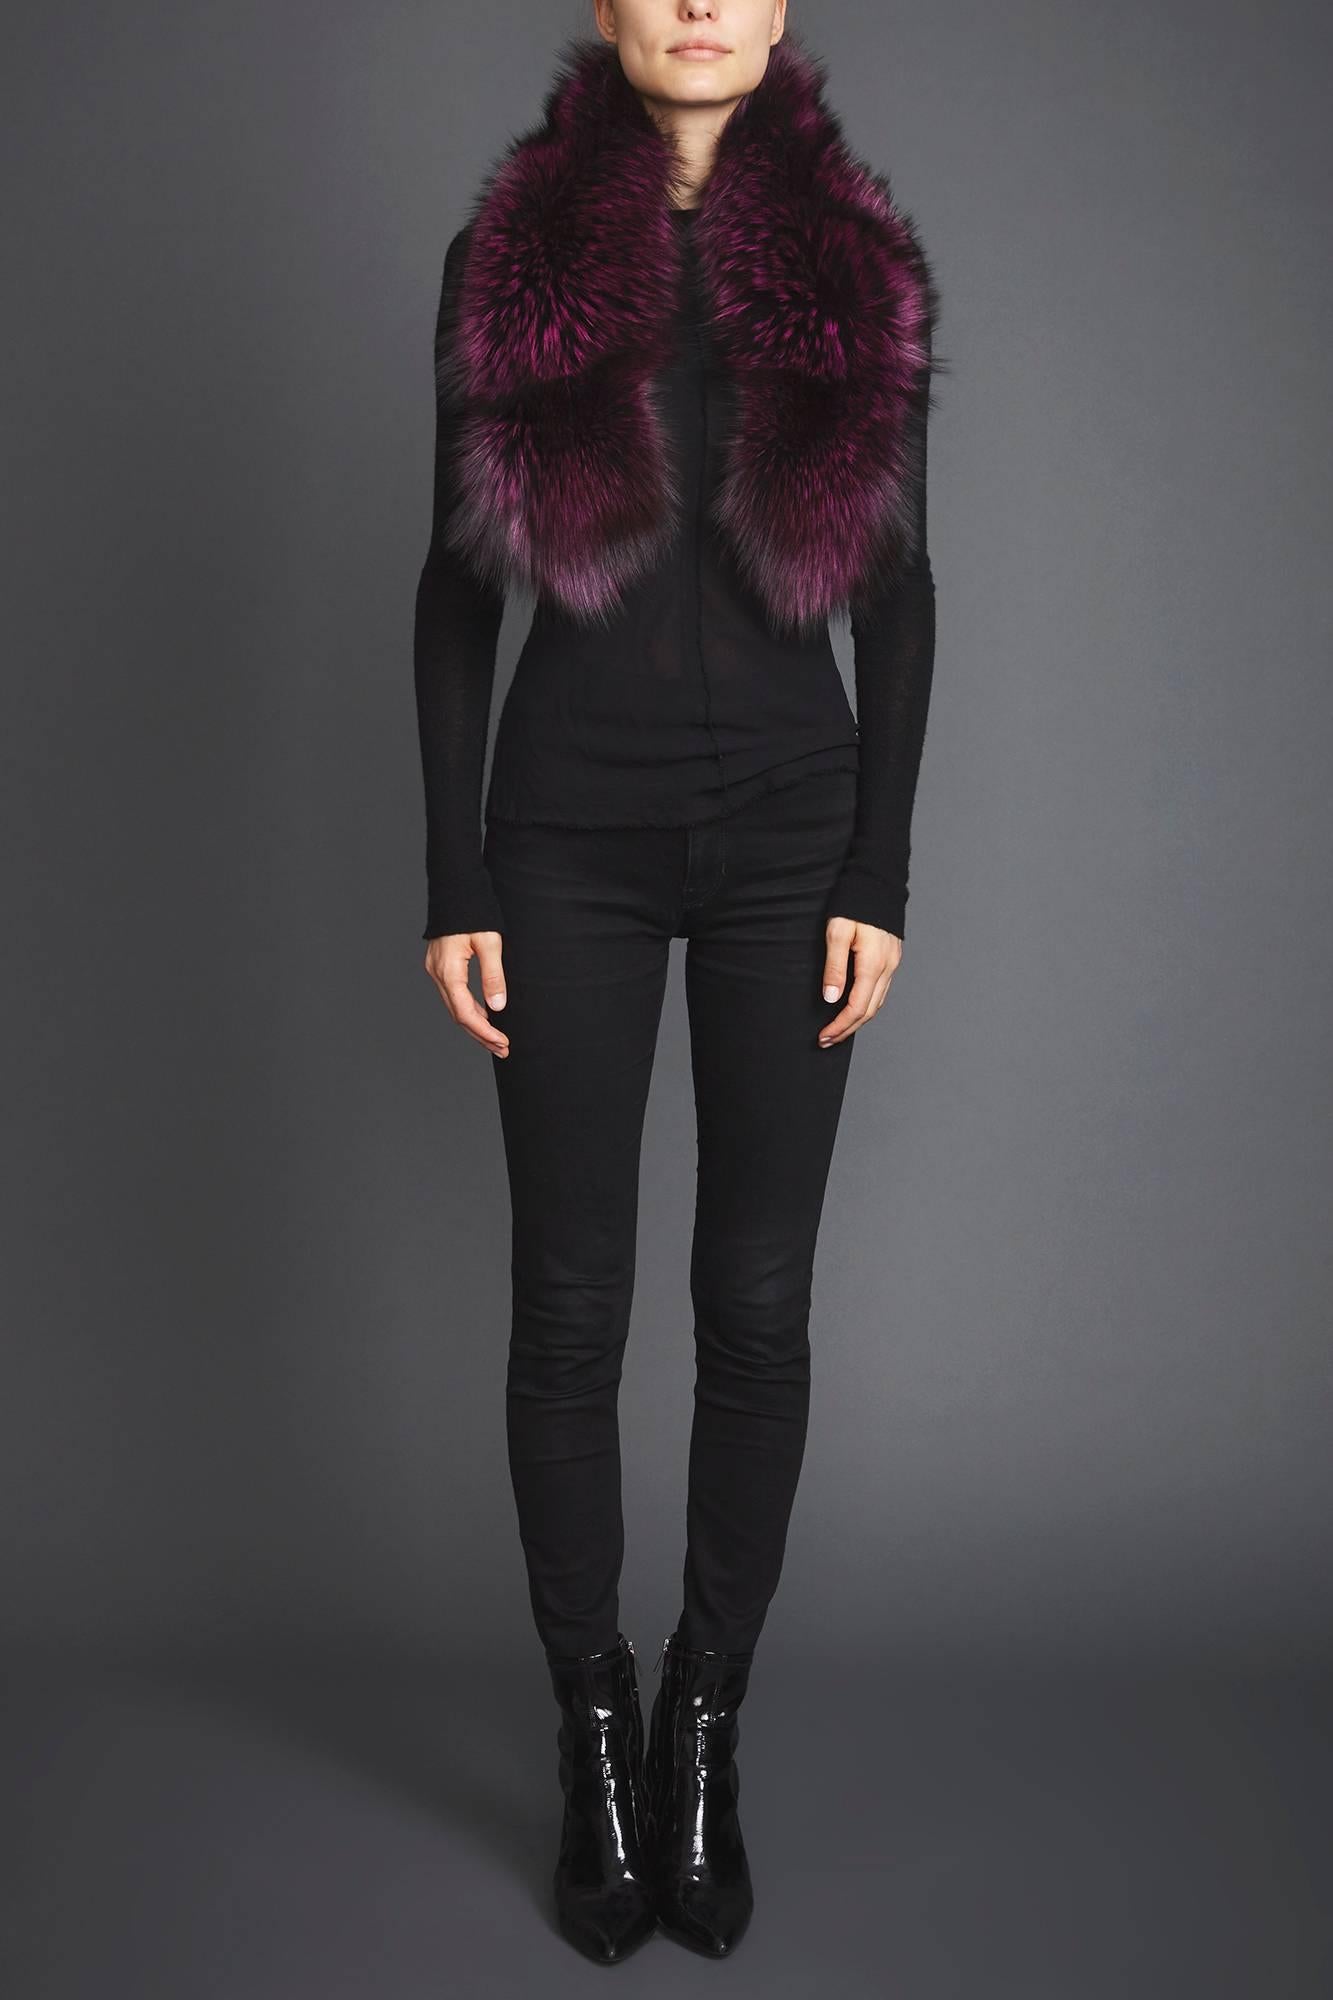 Women's or Men's Verheyen London Lapel Cross-through Collar Stole in Purple Fox Fur - Brand New